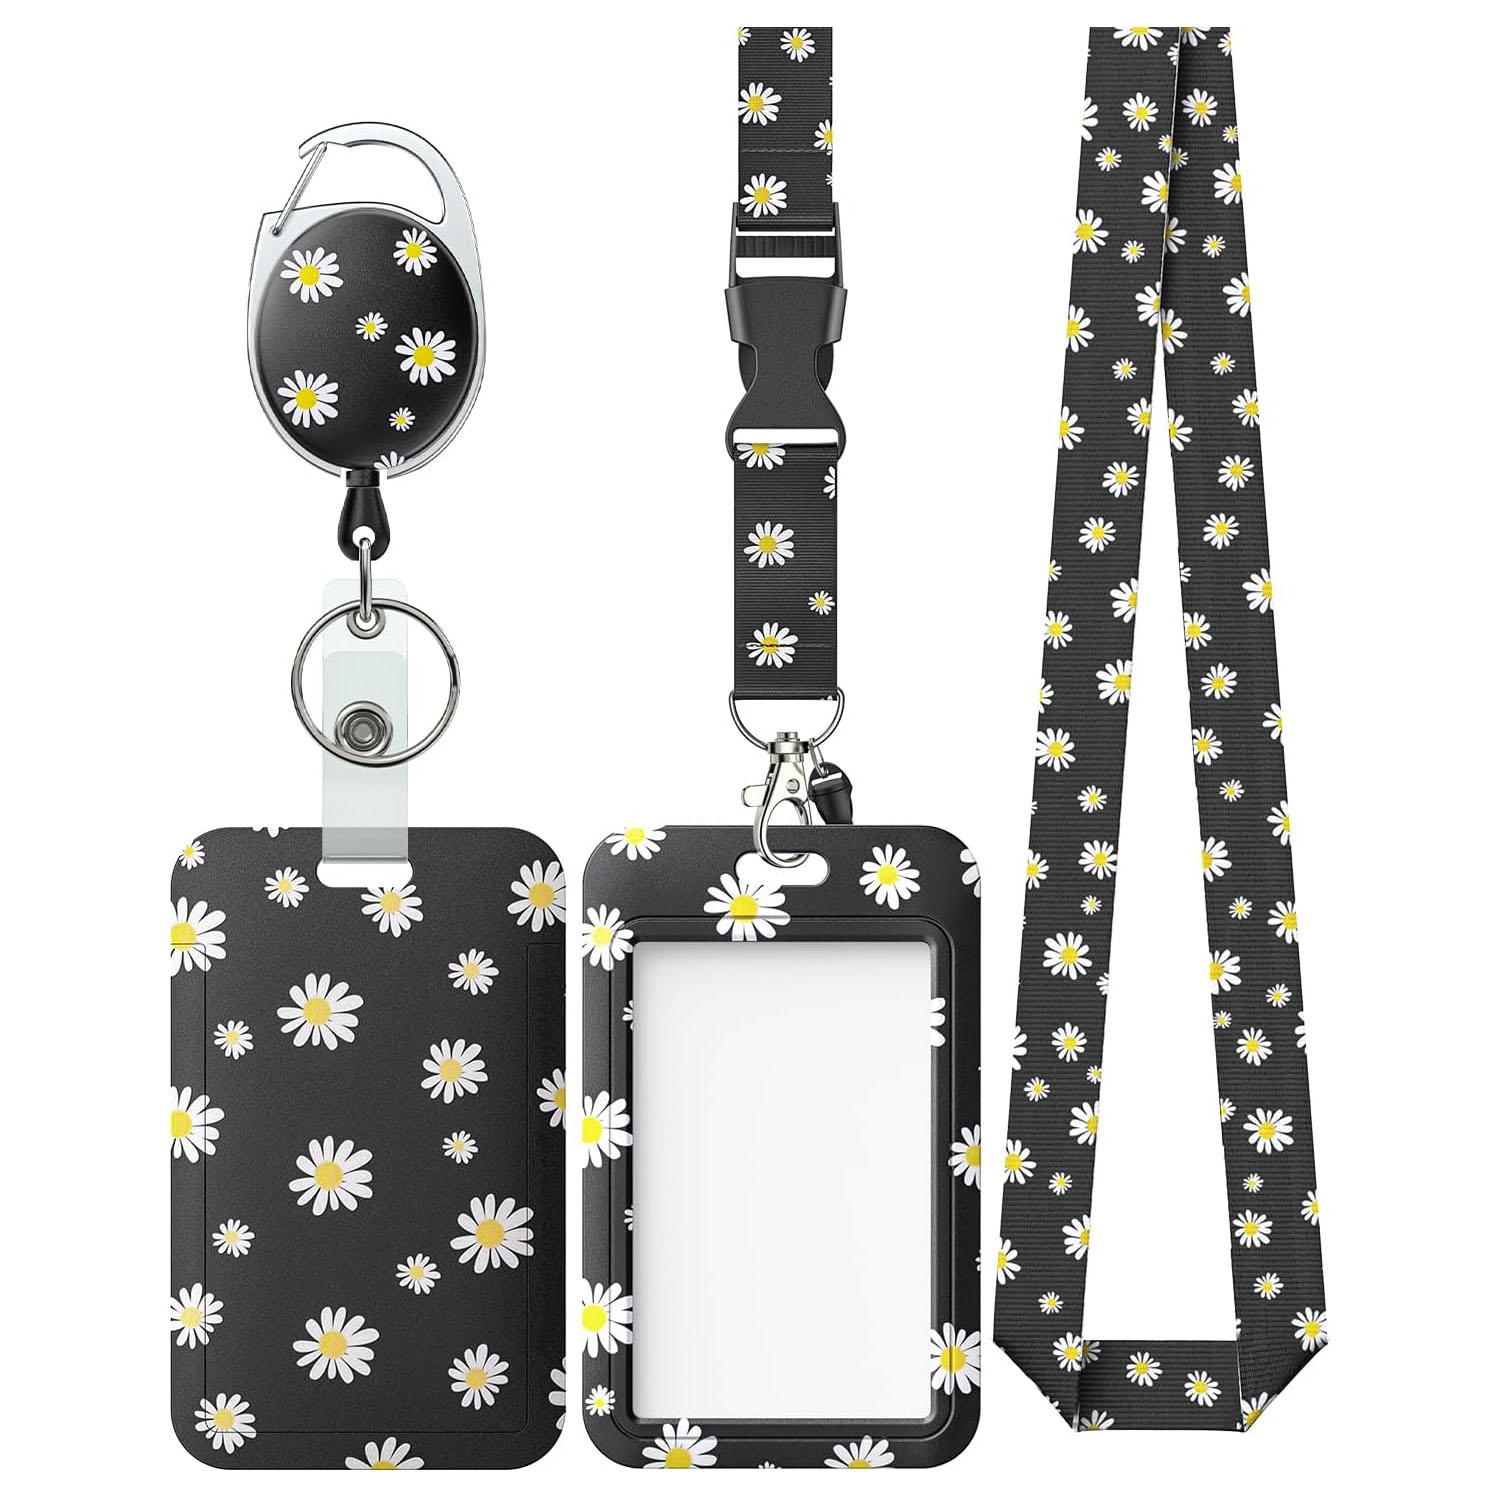 Floral,Home,Sliding Badge Holder White Flower Plastic Case with Retractable Badge Reel Carabiner Clip & Detachable Lanyard Strap Fashionable